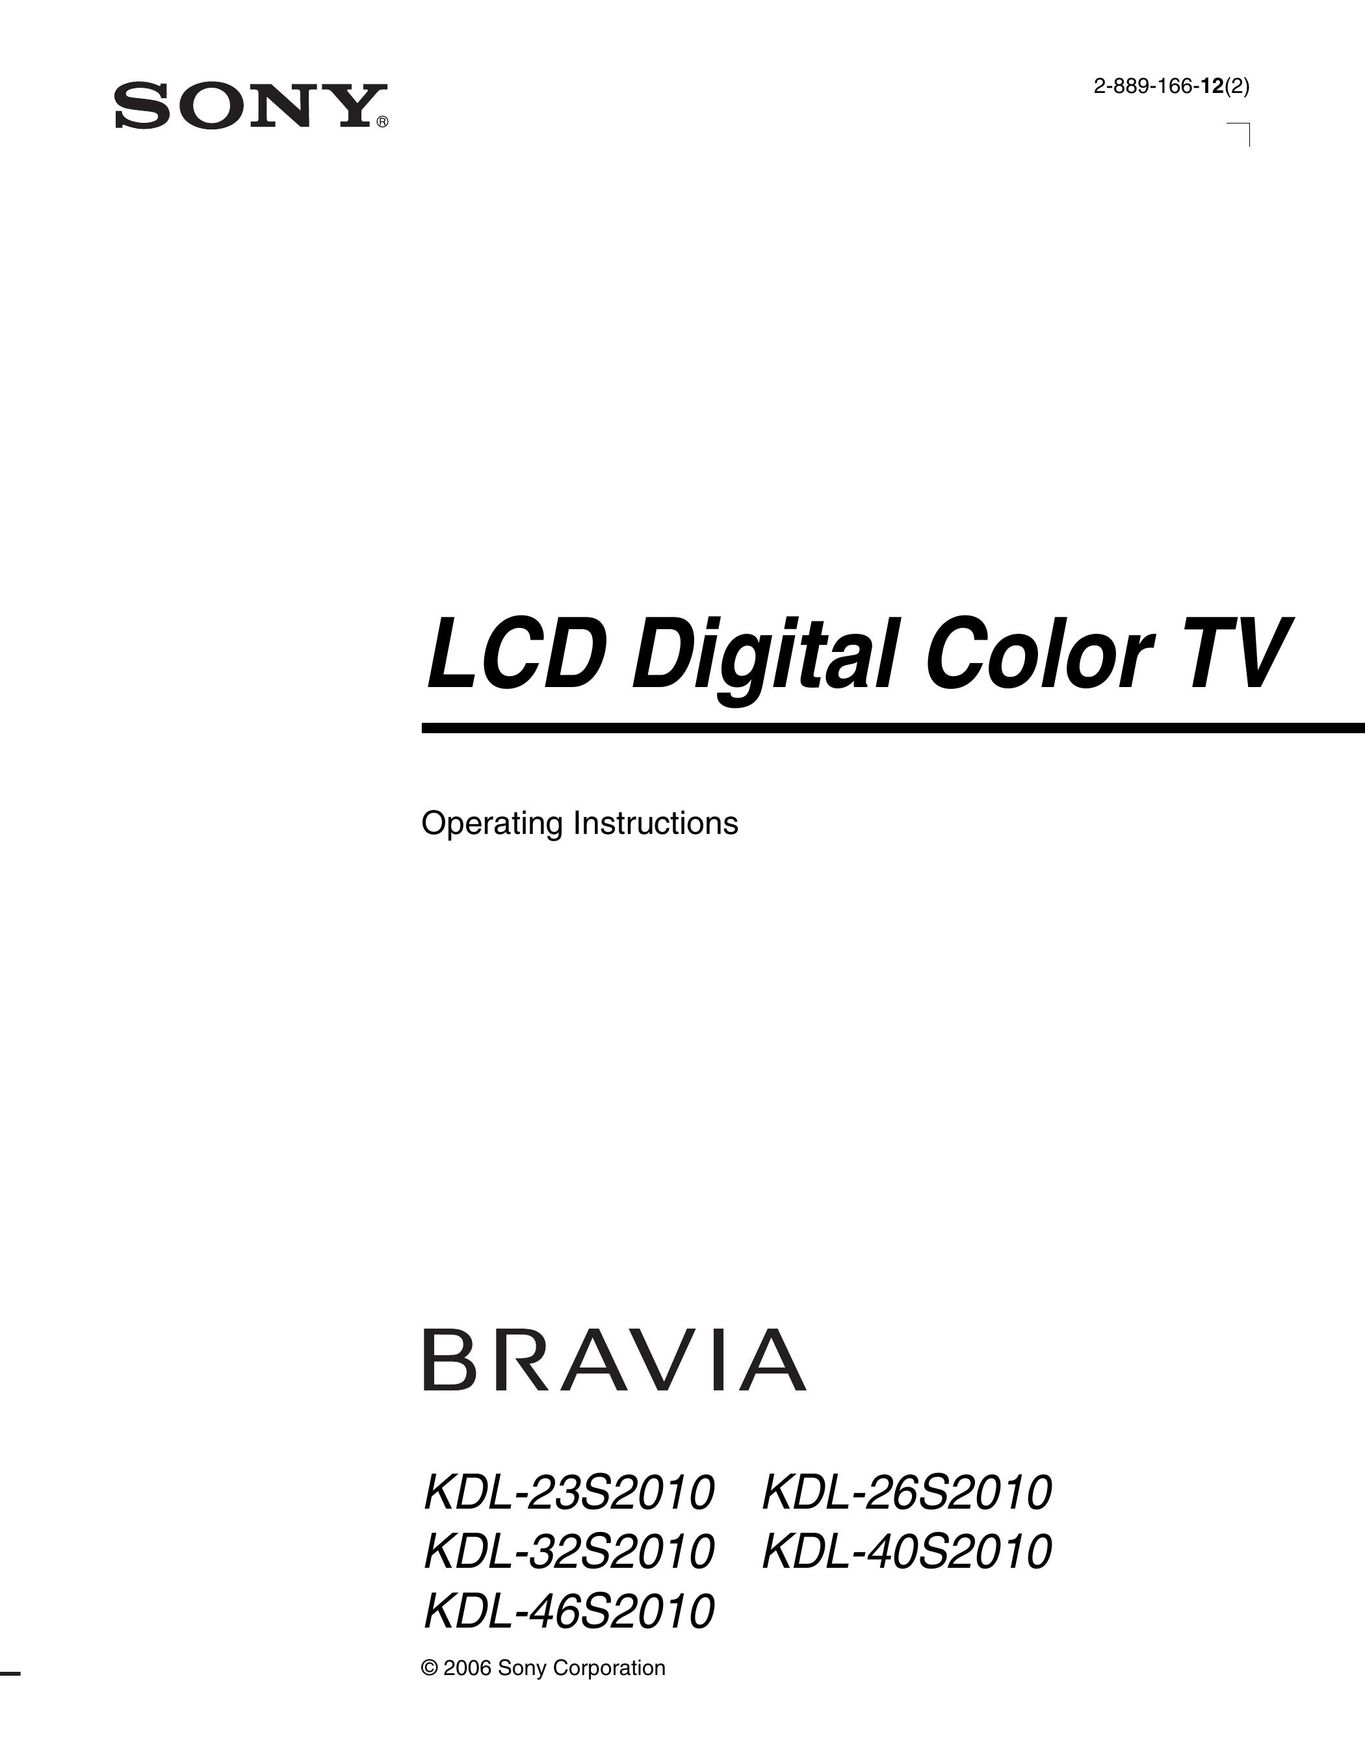 Sony KDL-40S2010 TV VCR Combo User Manual